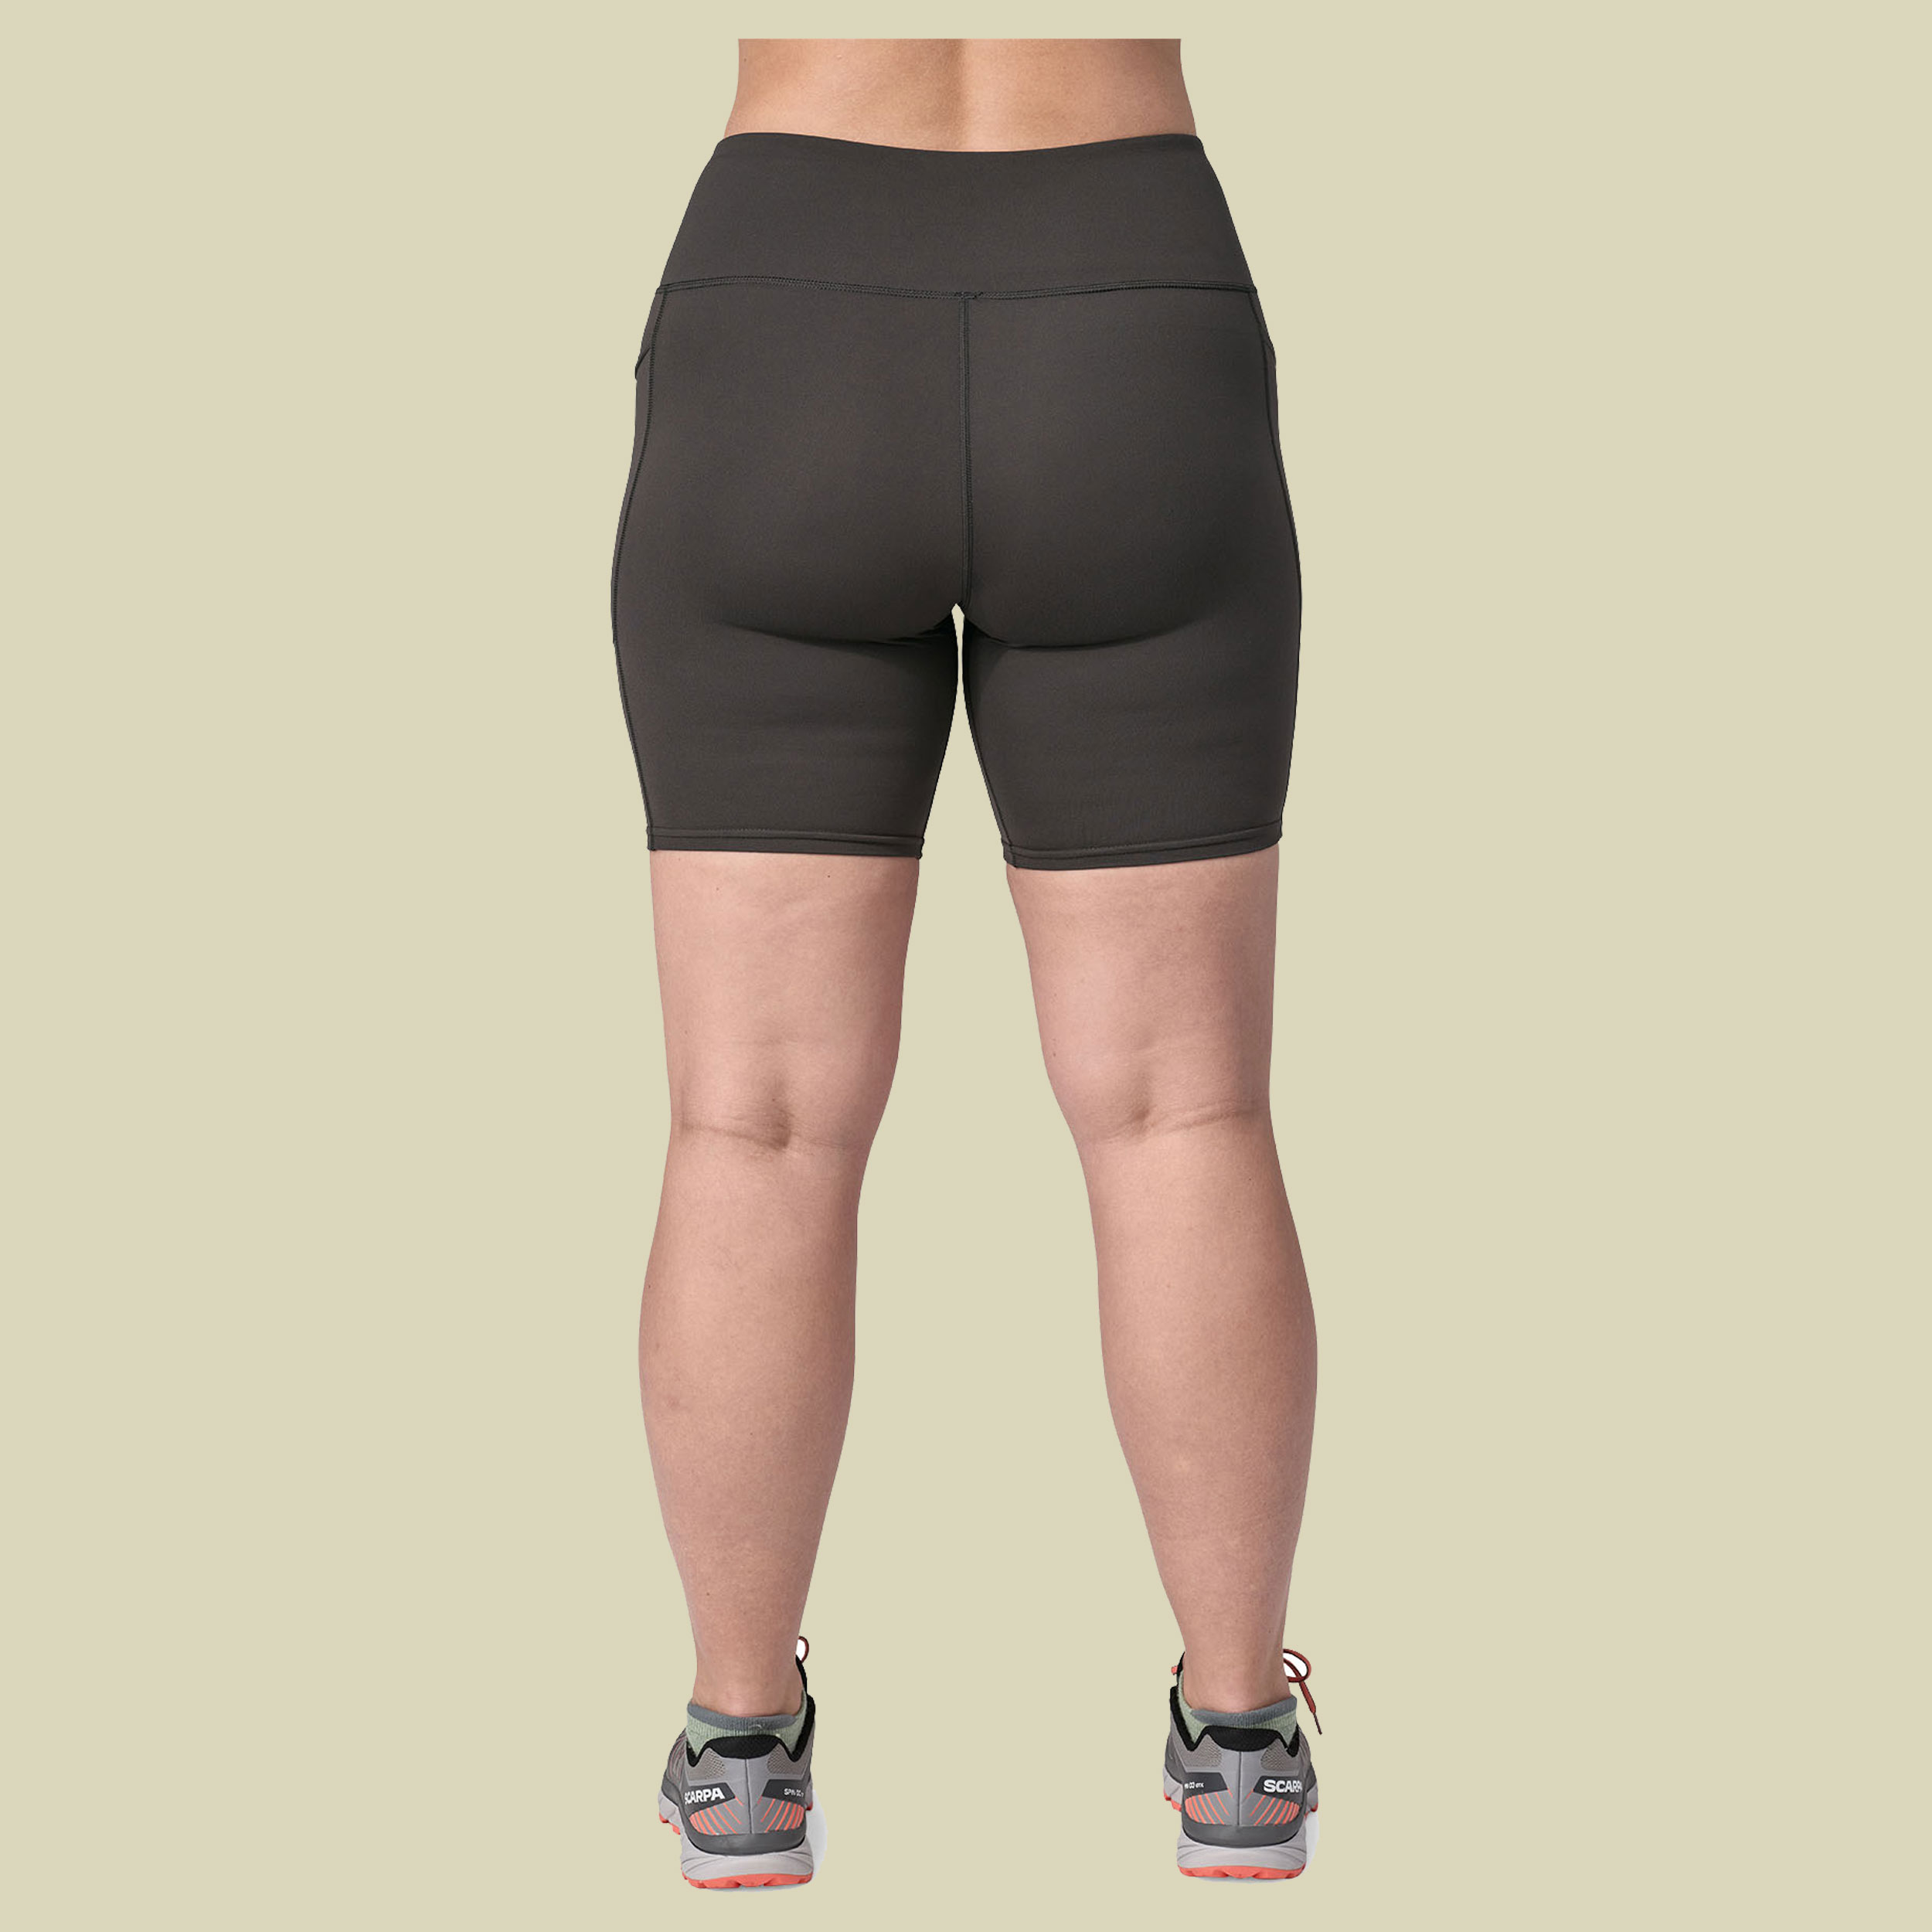 Maipo Shorts -8" Women S schwarz - black